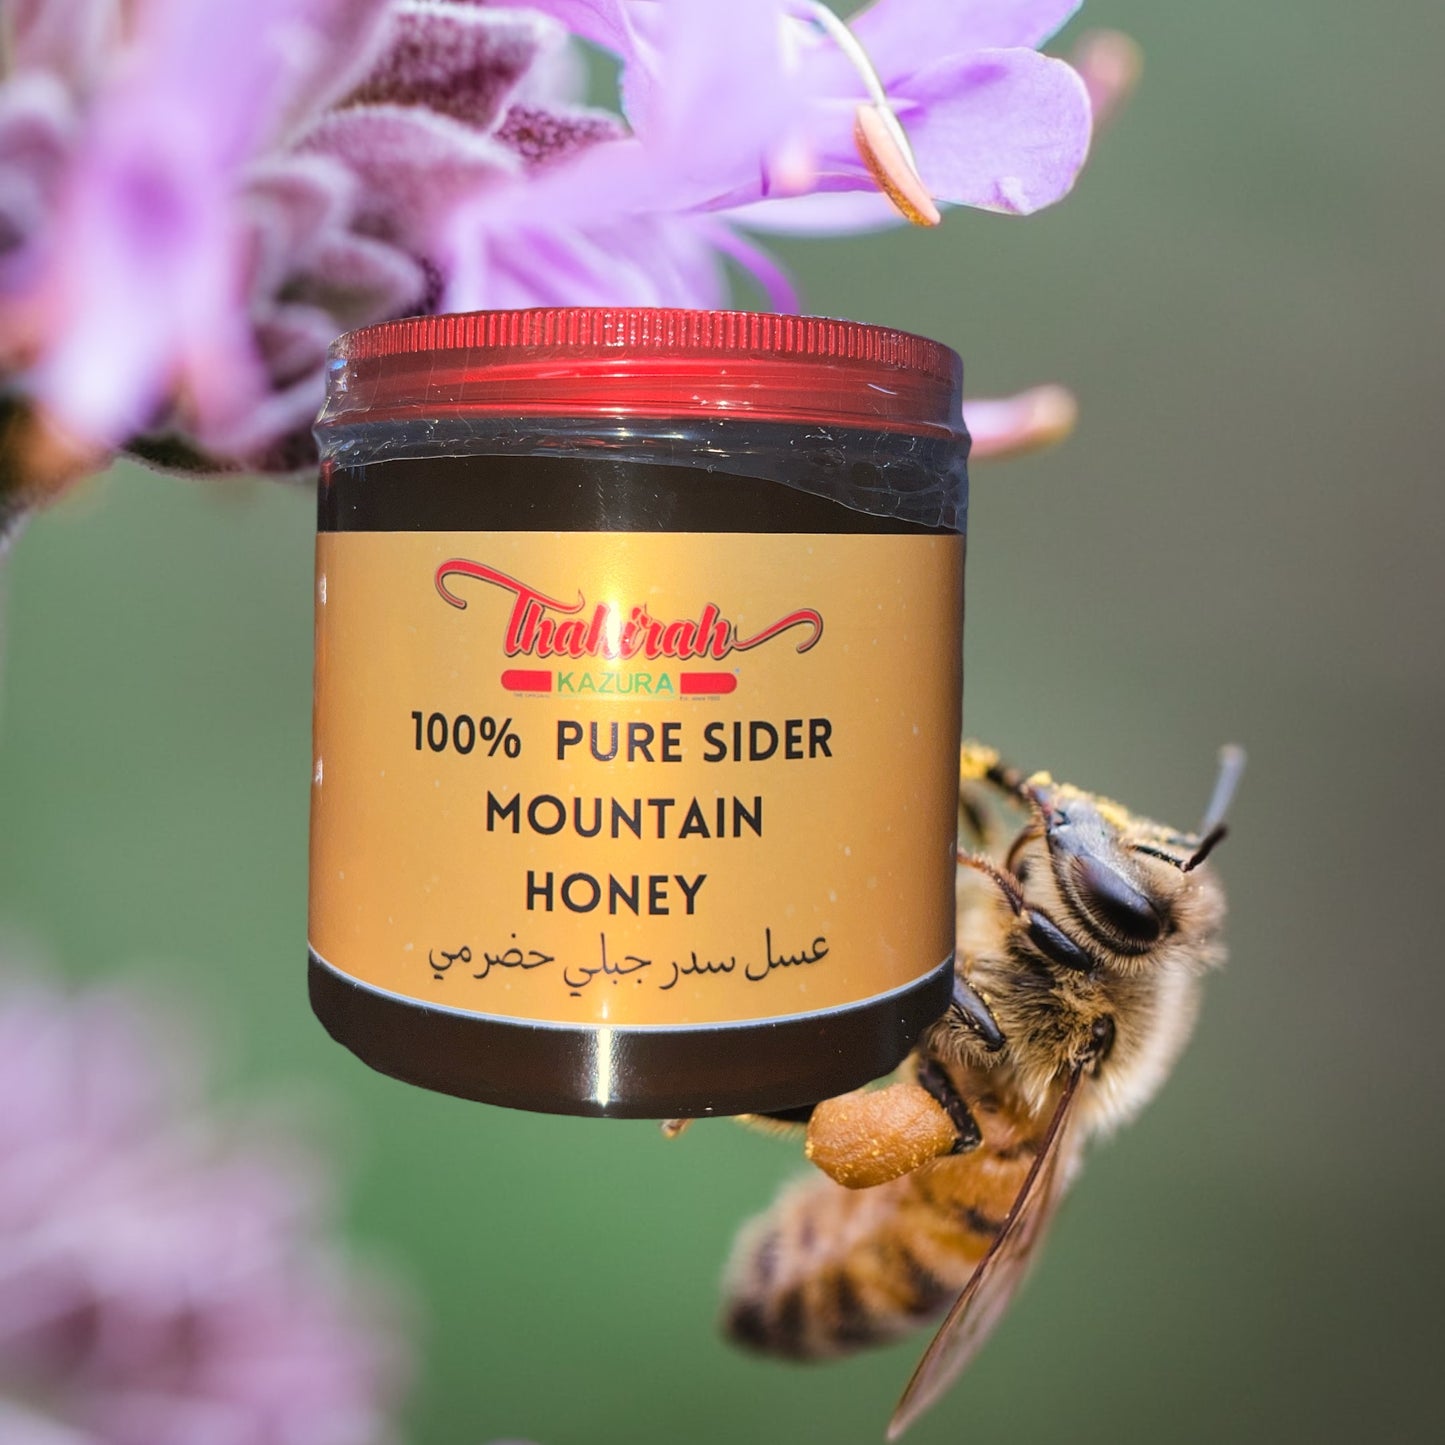 Sider Mountain Honey